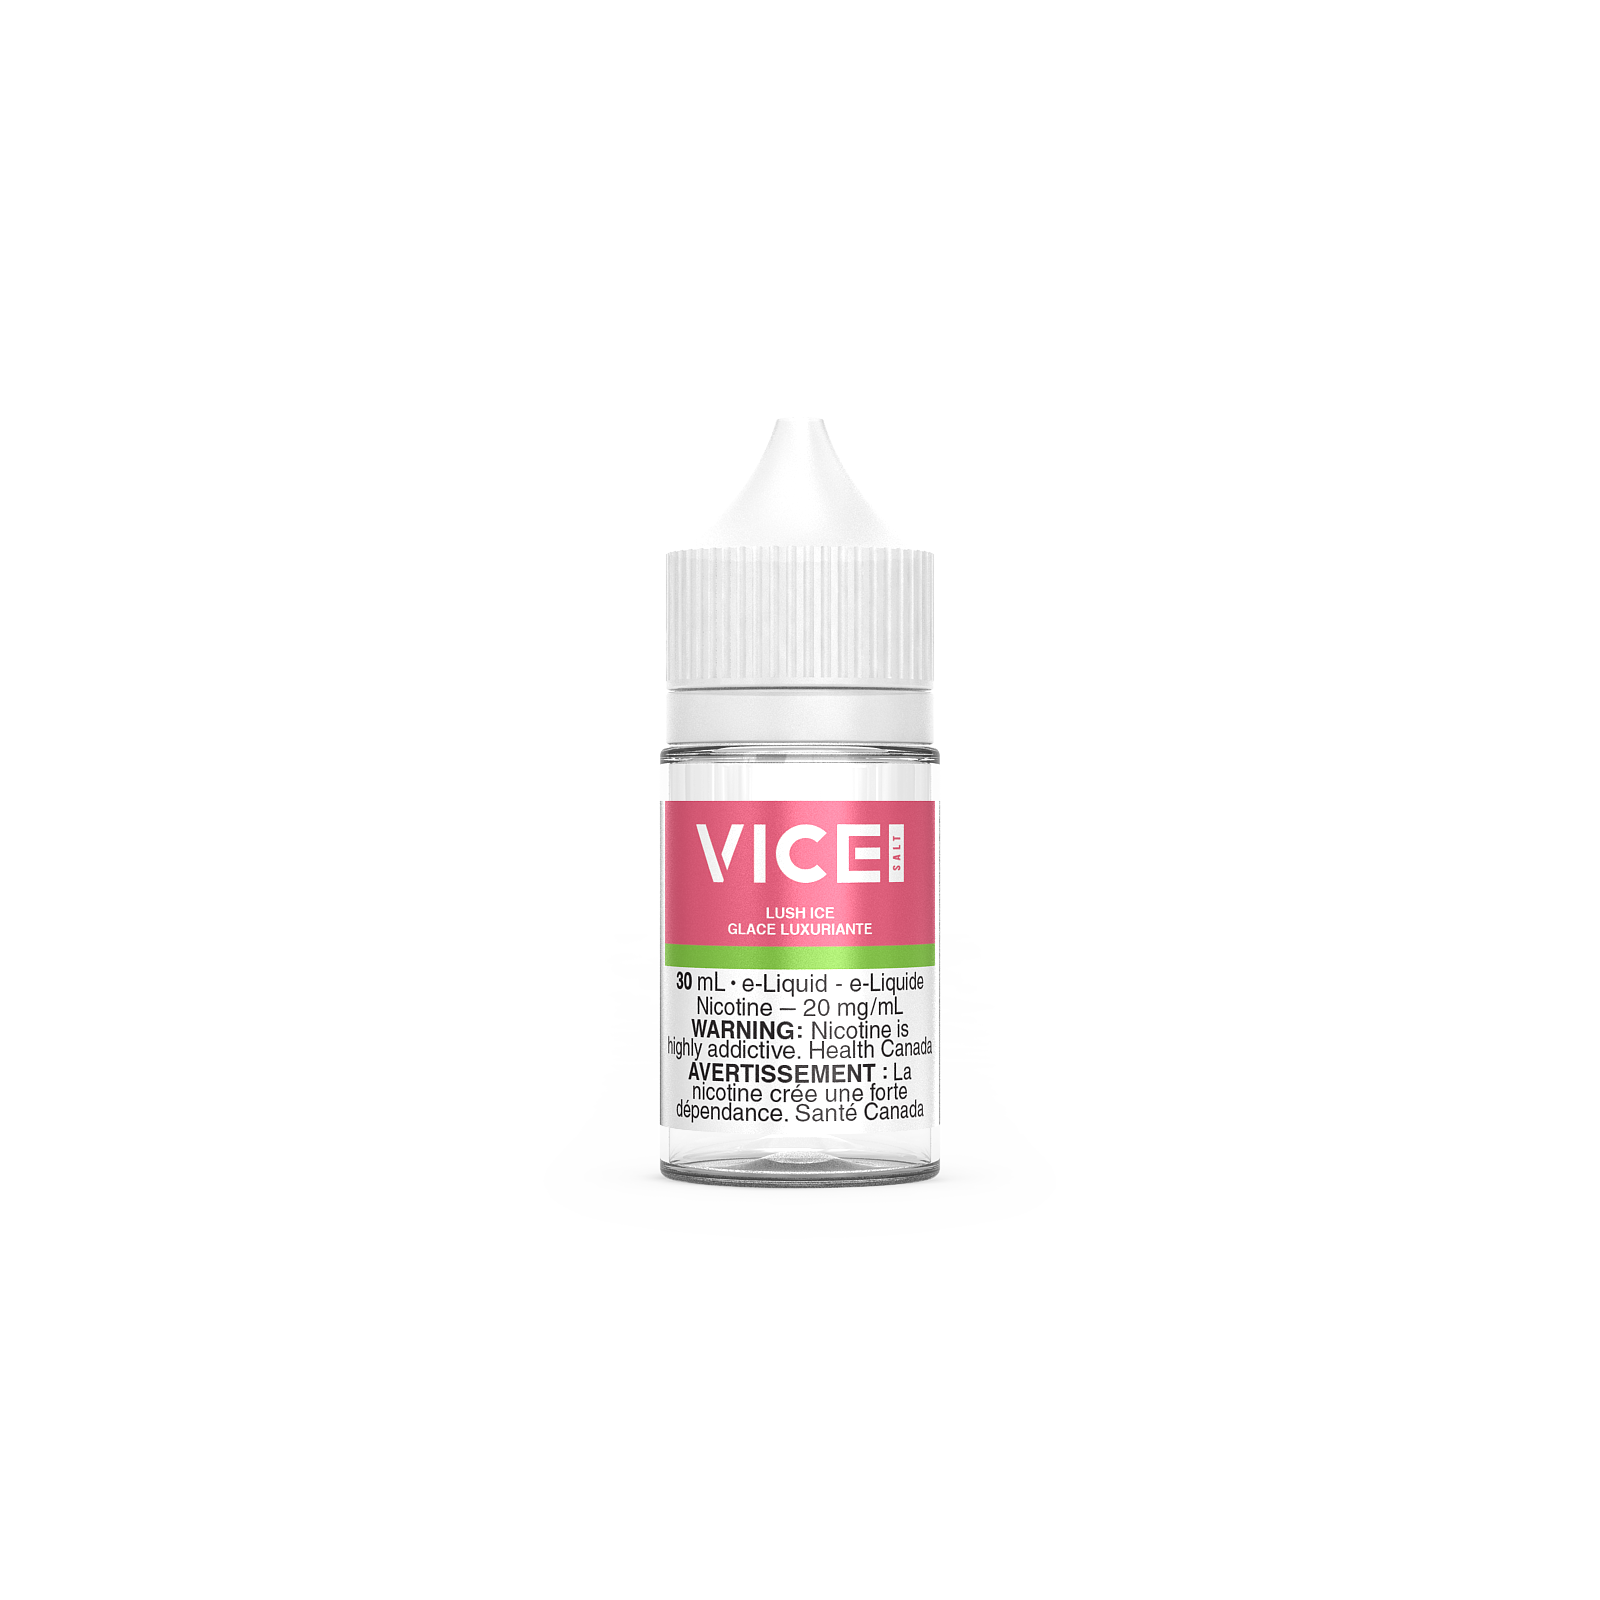 Vice Salt - LUSH ICE